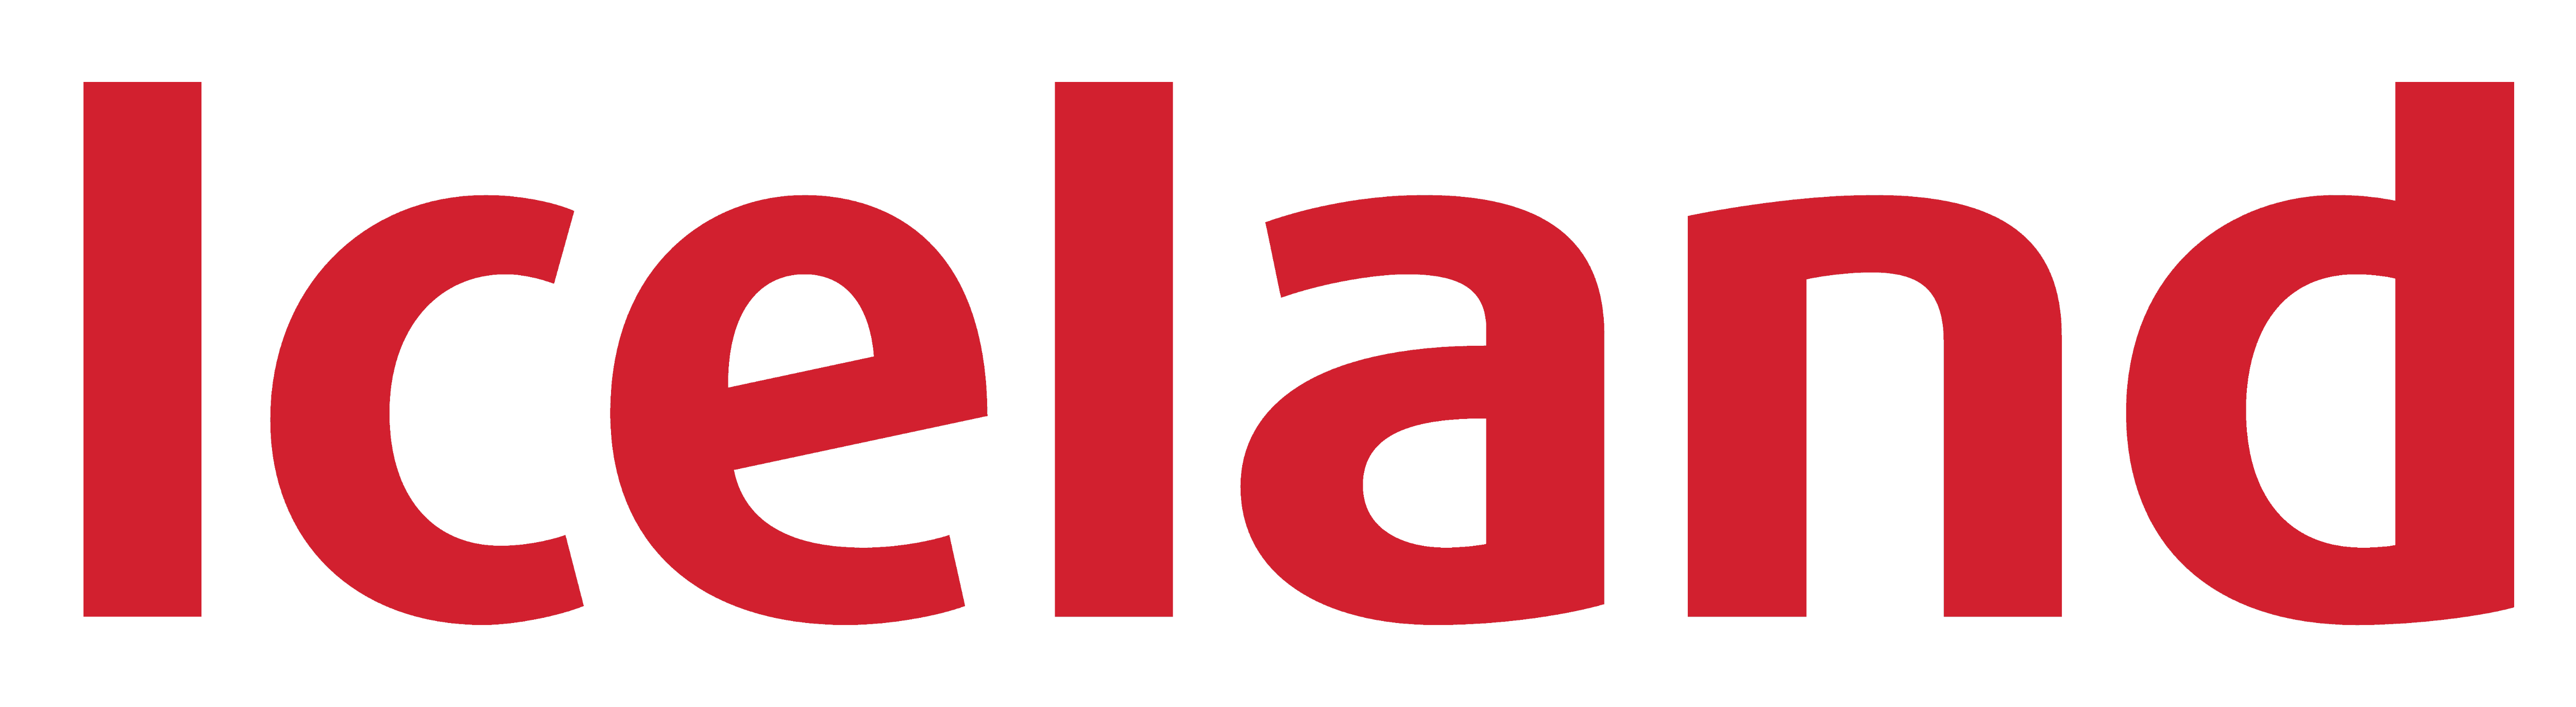 Iceland Logo - Iceland (supermarket) – Logos Download